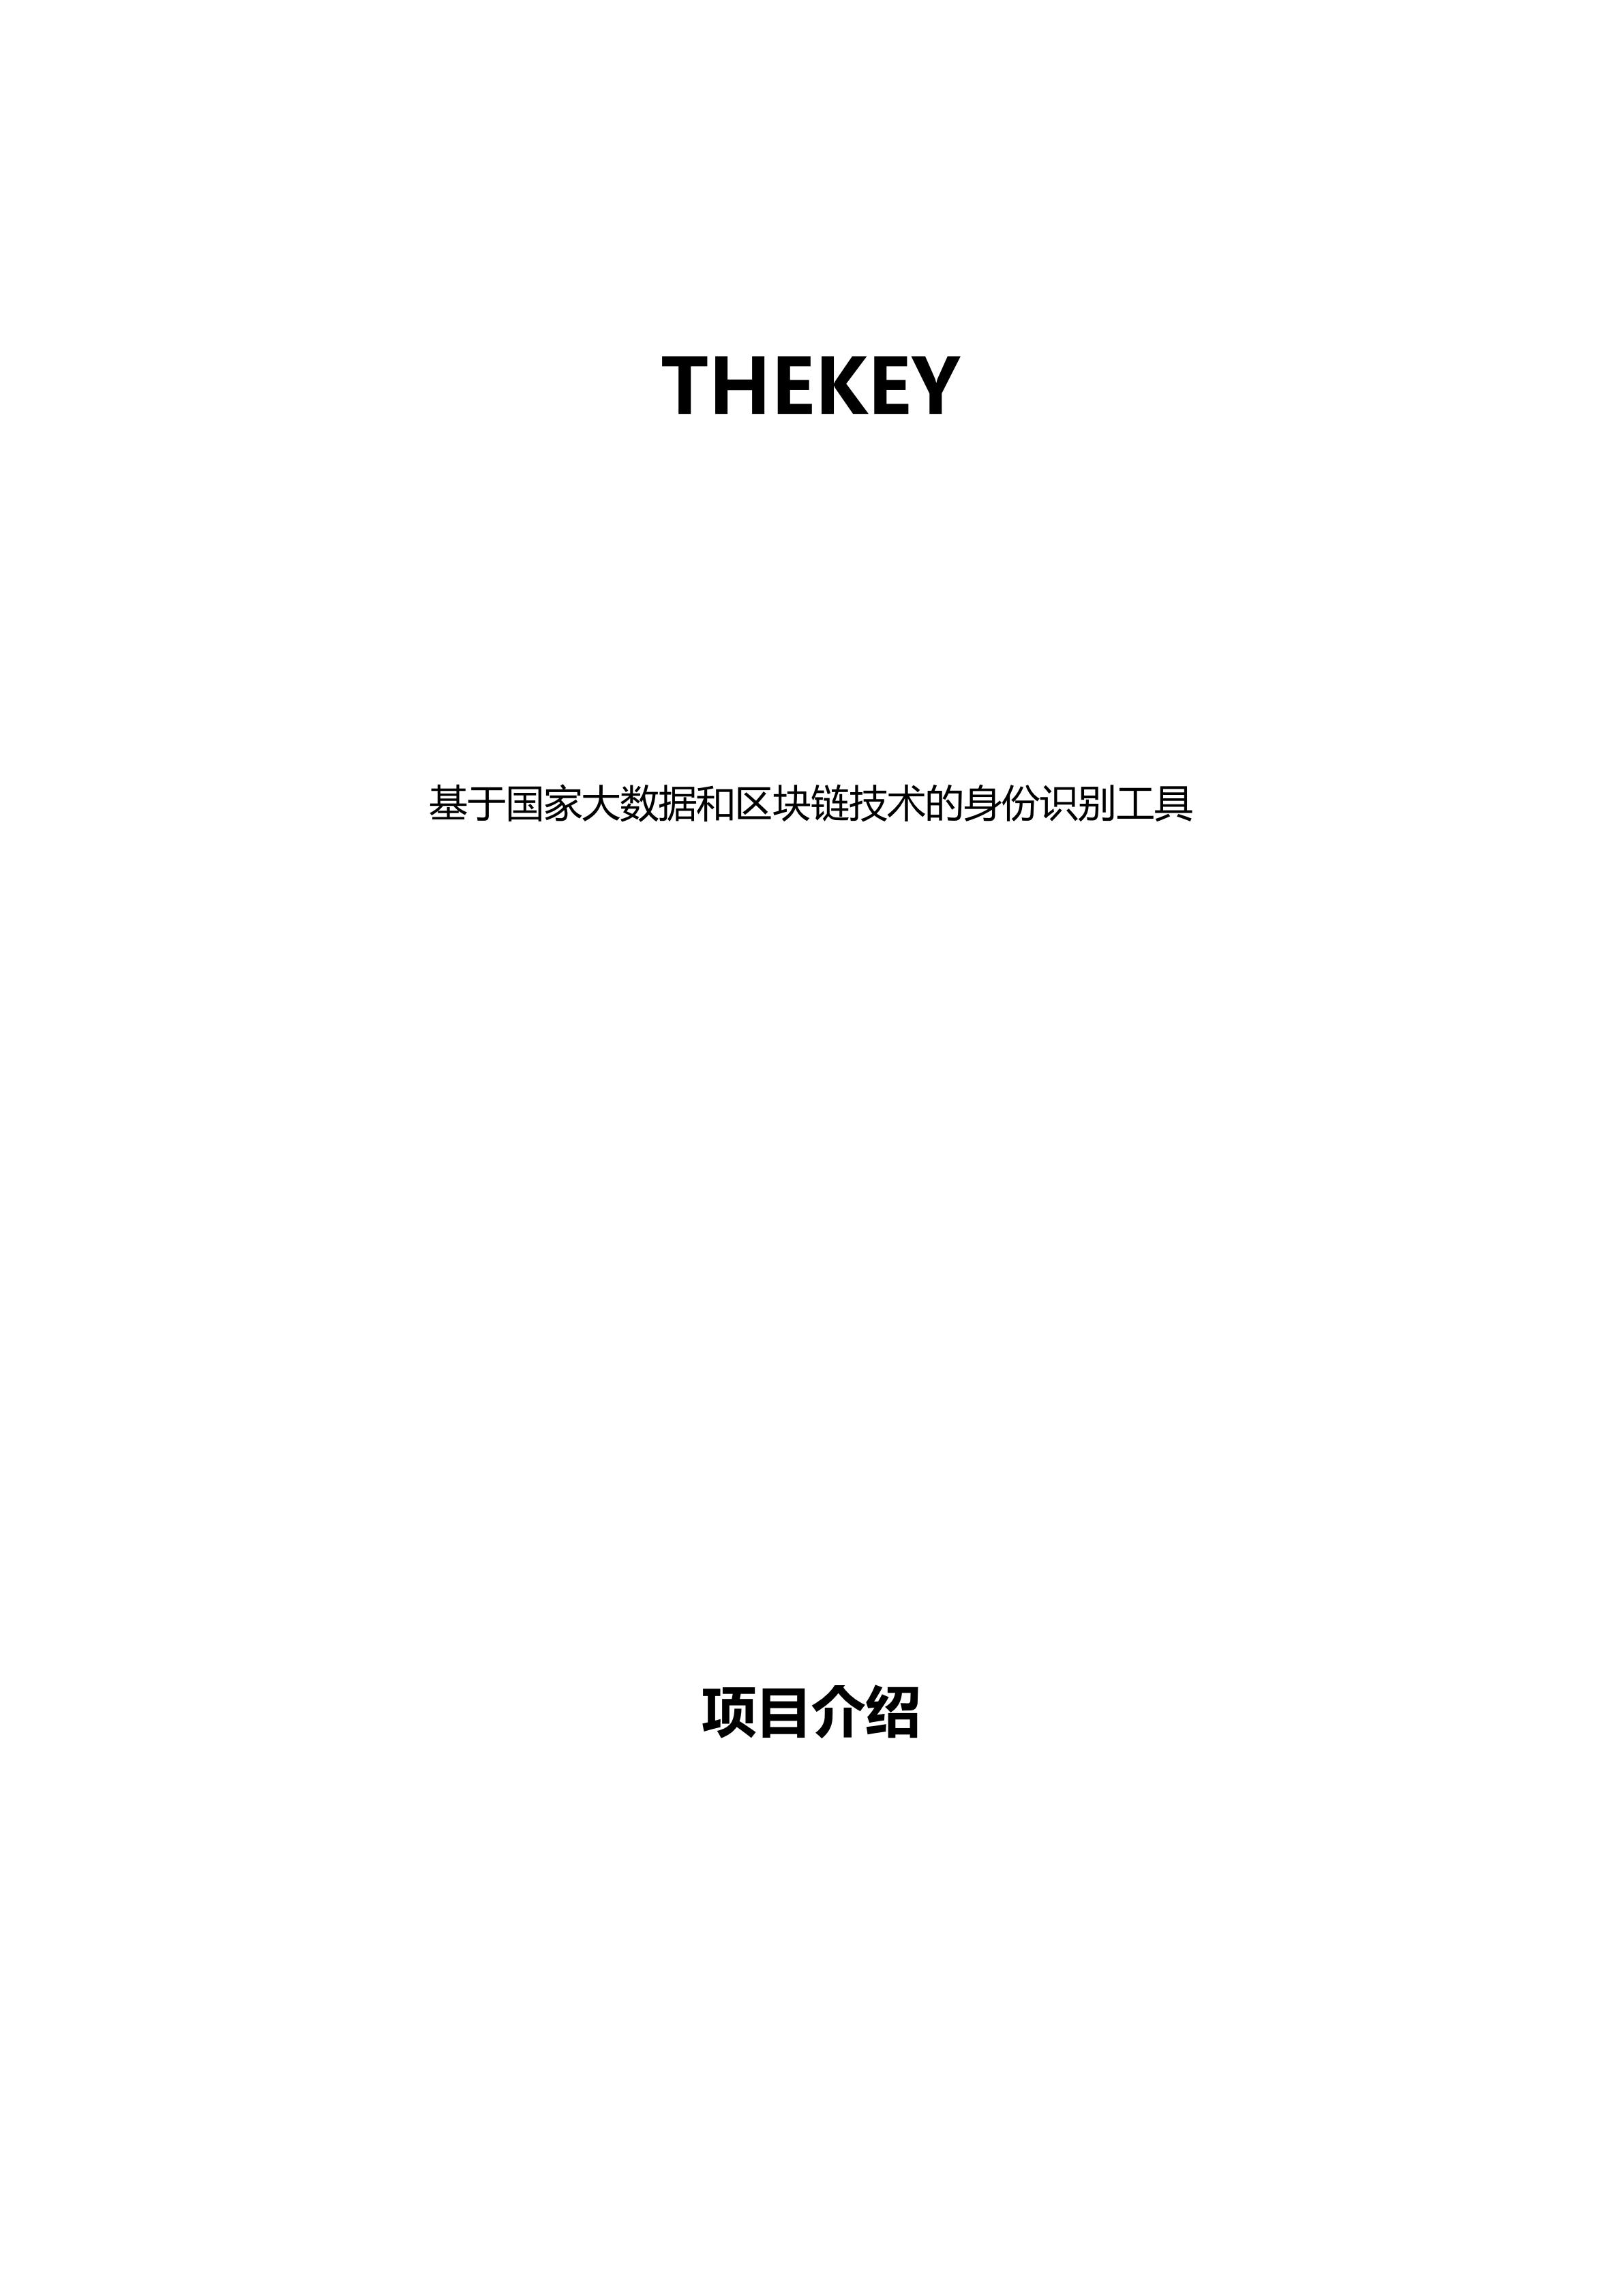 TKY_THEKEY_WHITE_PAPER_CHINESE_00.jpg